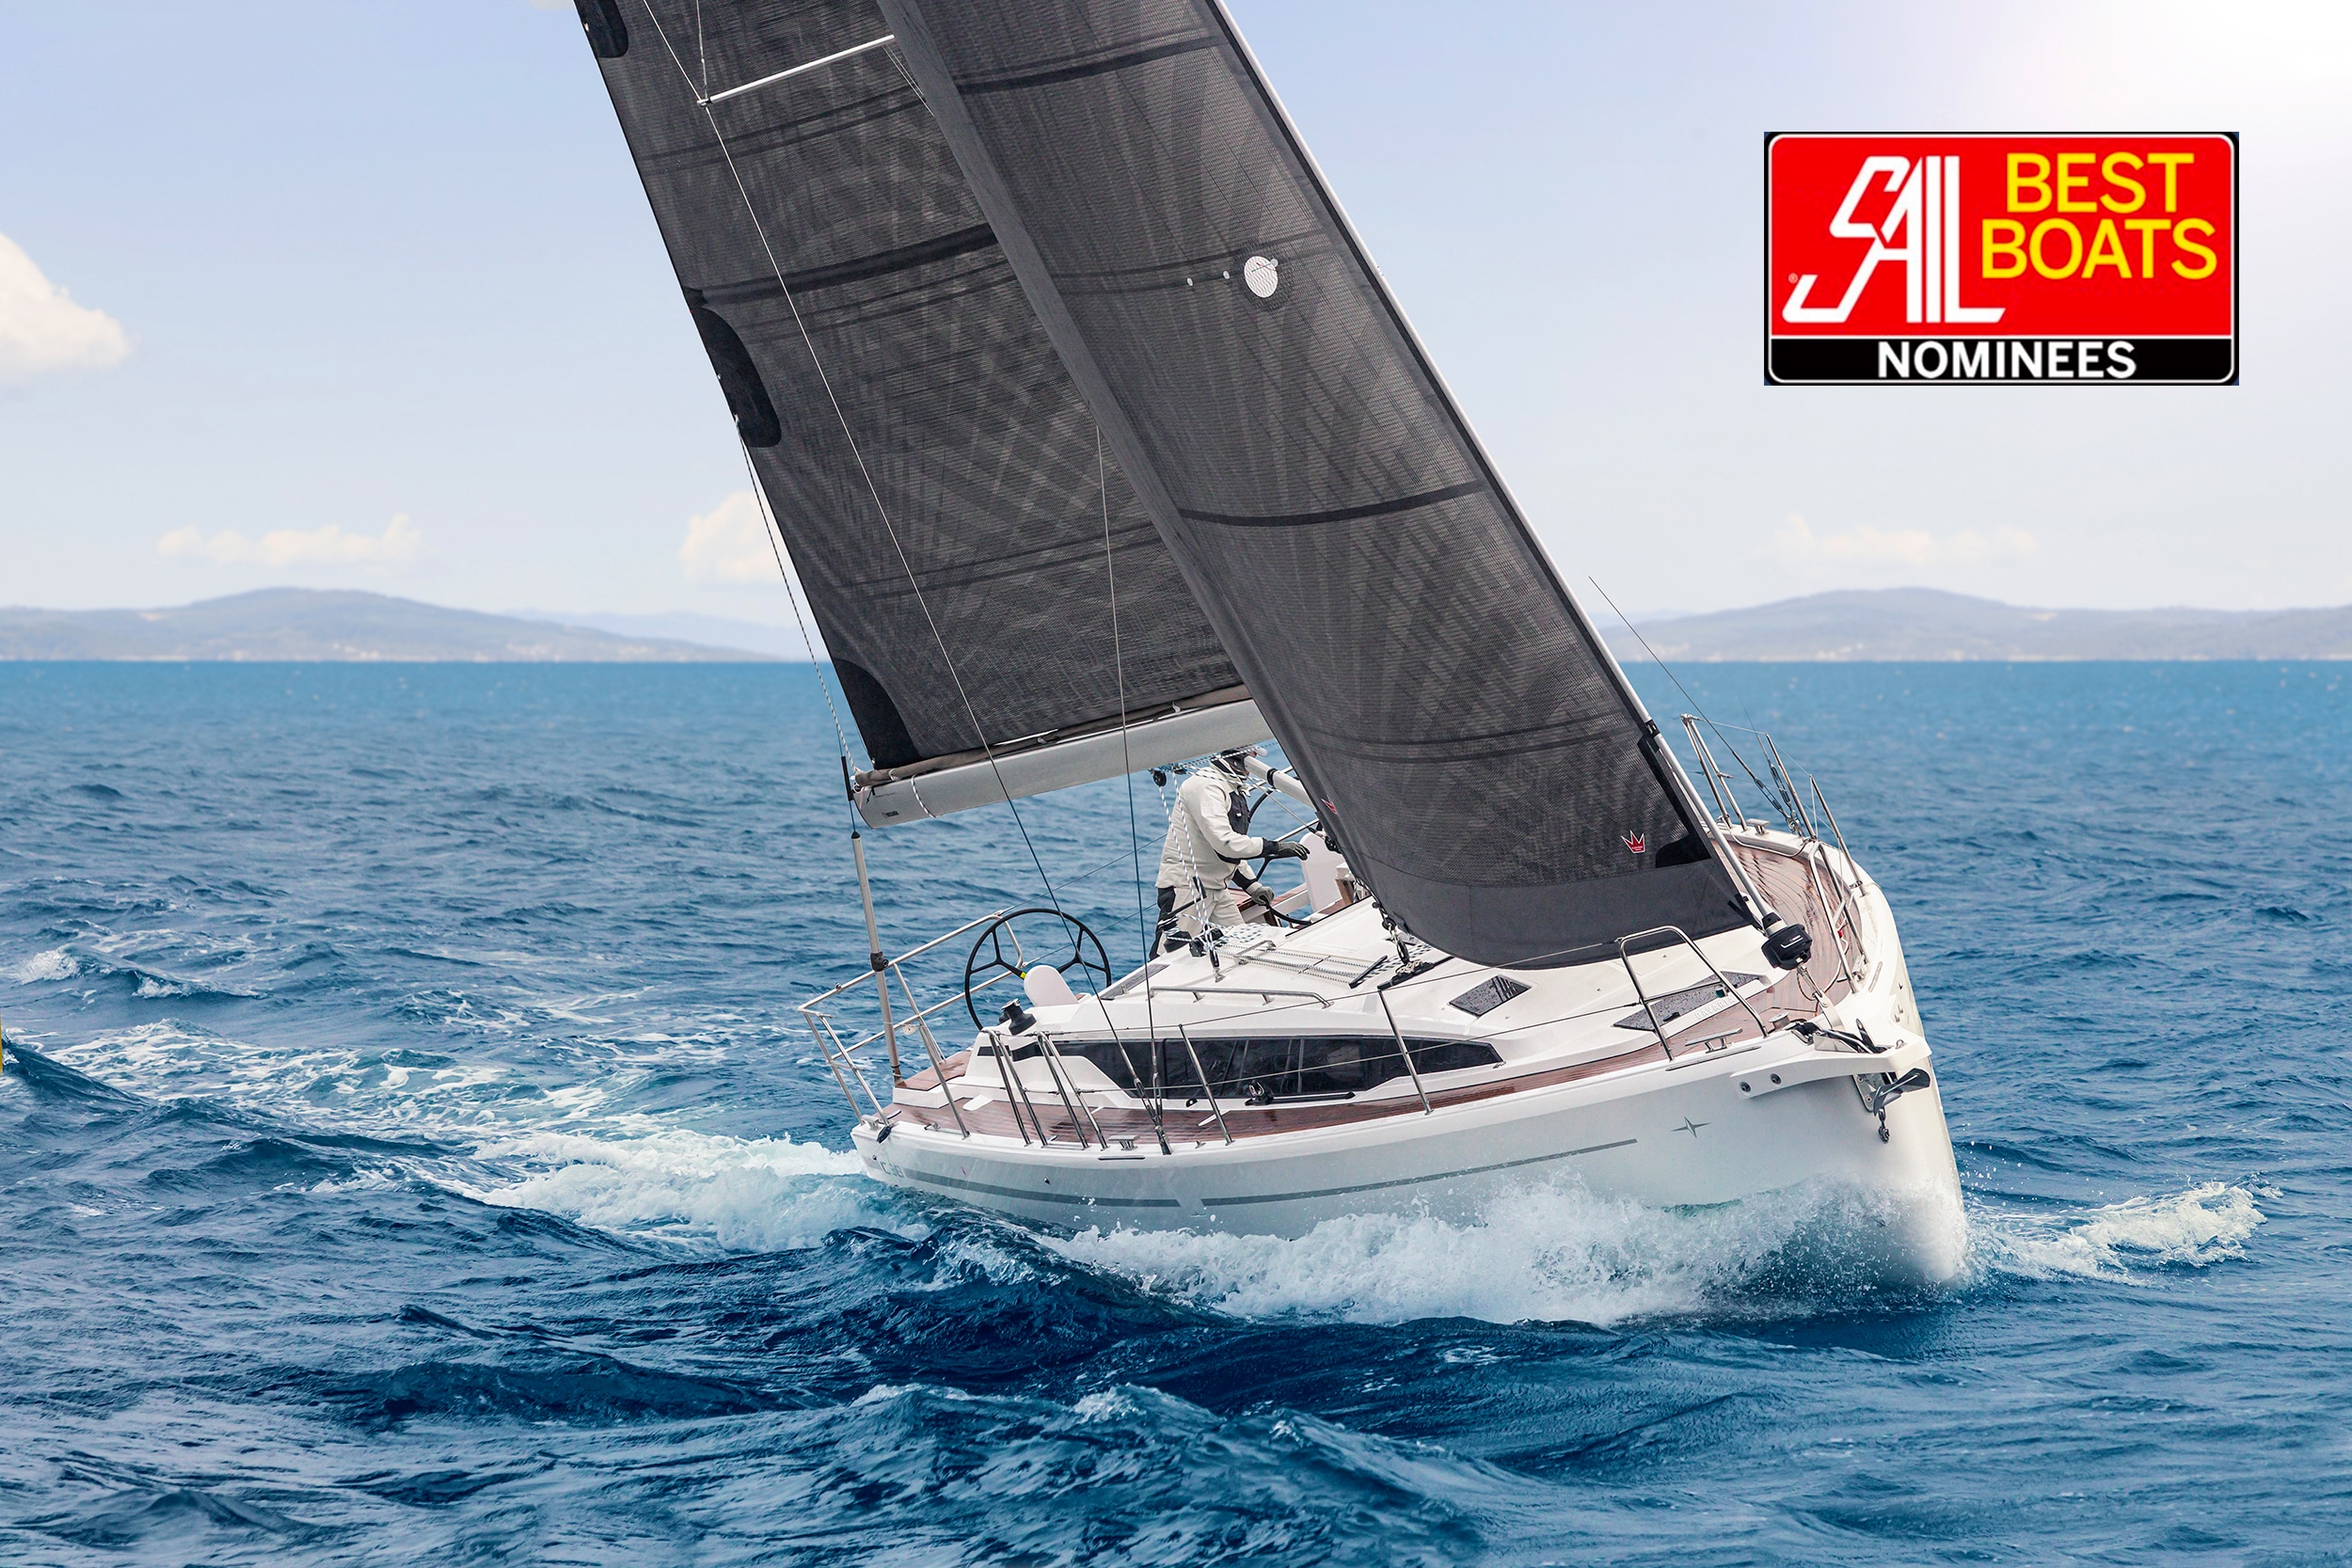 Bavaria C38 by Cossutti Yacht Design Sail's Best Boats Award nominee